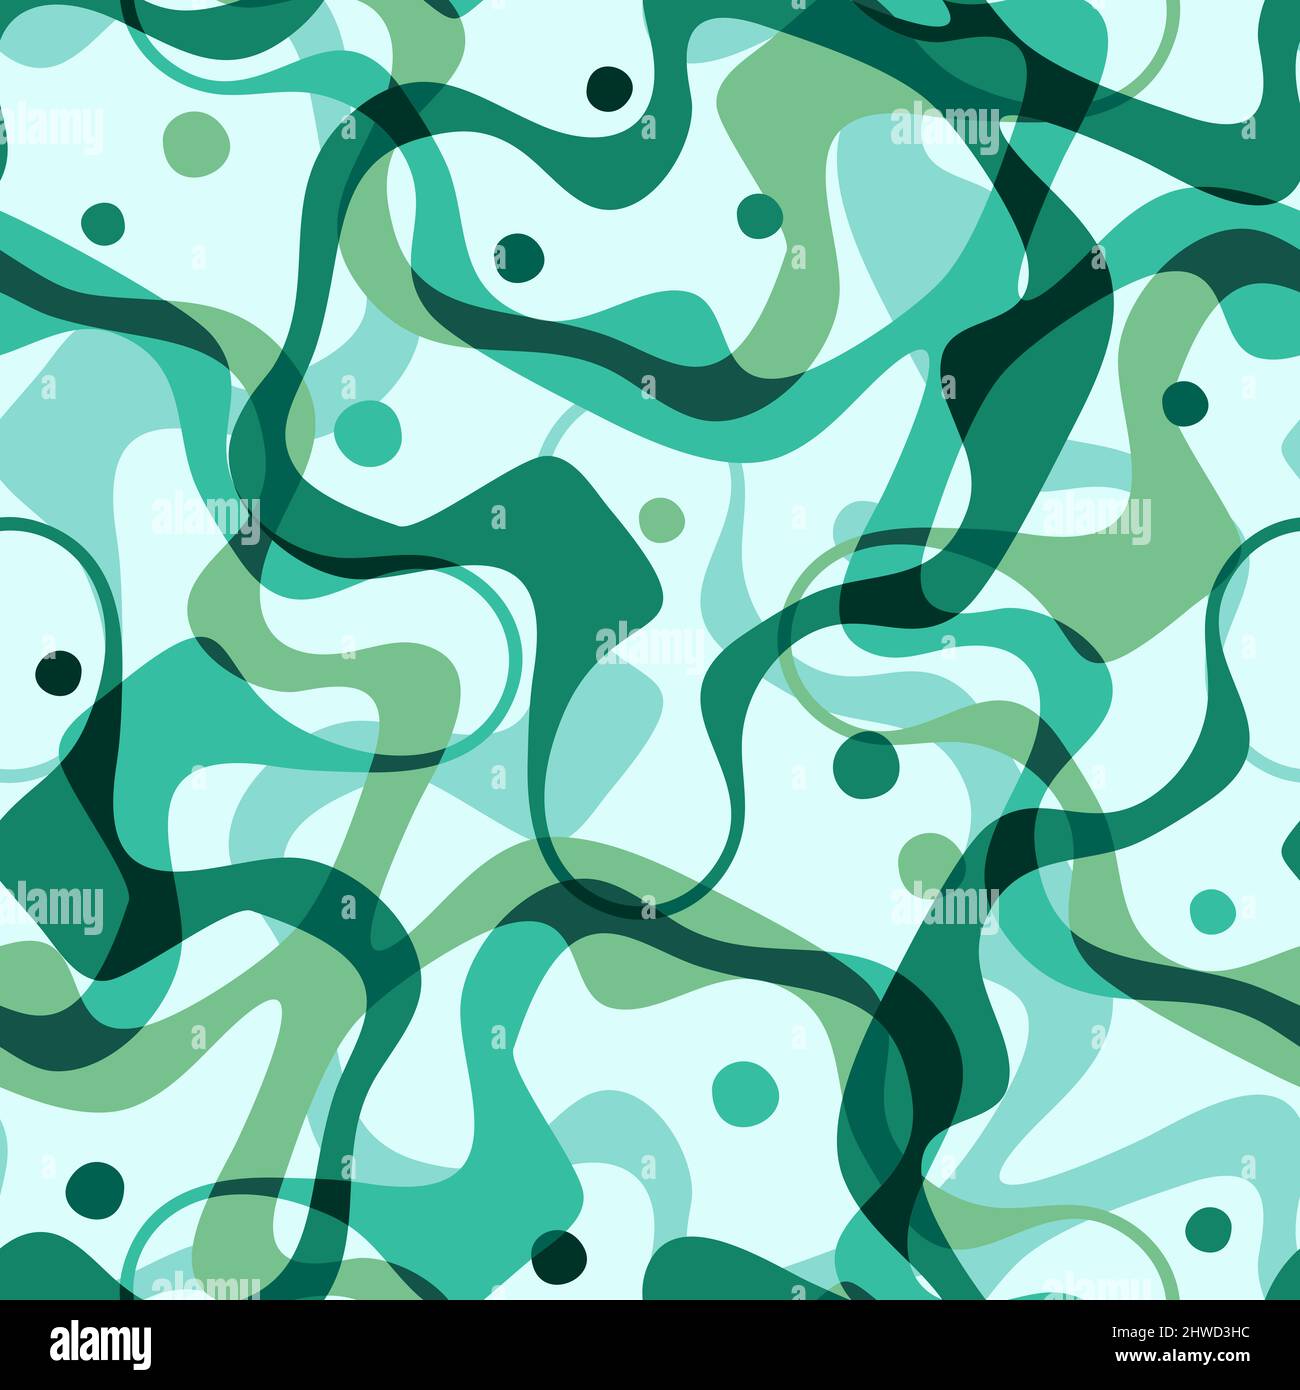 Seamless pattern with organic abstract motifs Stock Photo